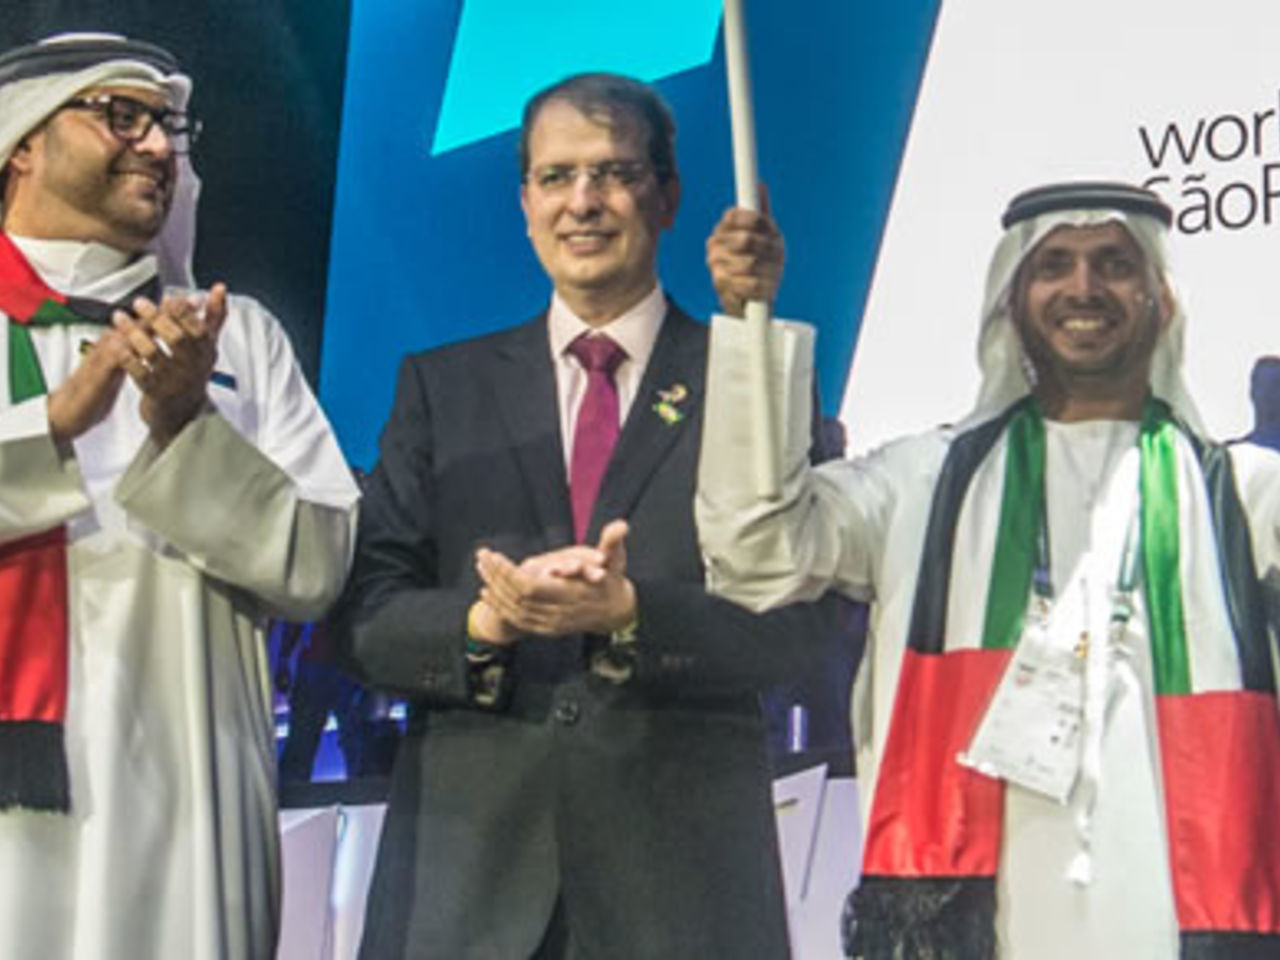 News from WorldSkills Abu Dhabi 2017